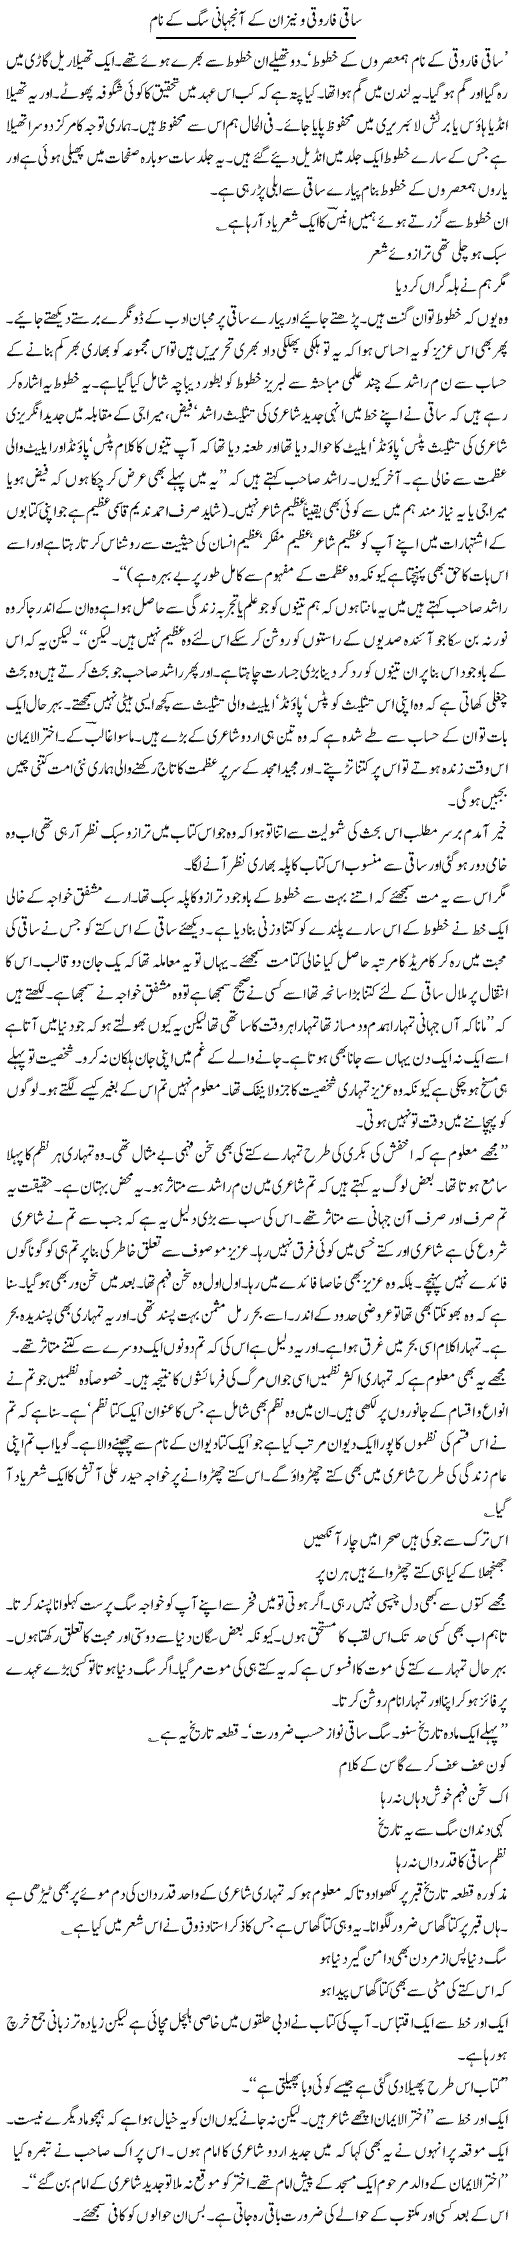 Saqi Farooqi O Neez Un Ke Aanjhani Sagh Ke Naam | Intizar Hussain | Daily Urdu Columns